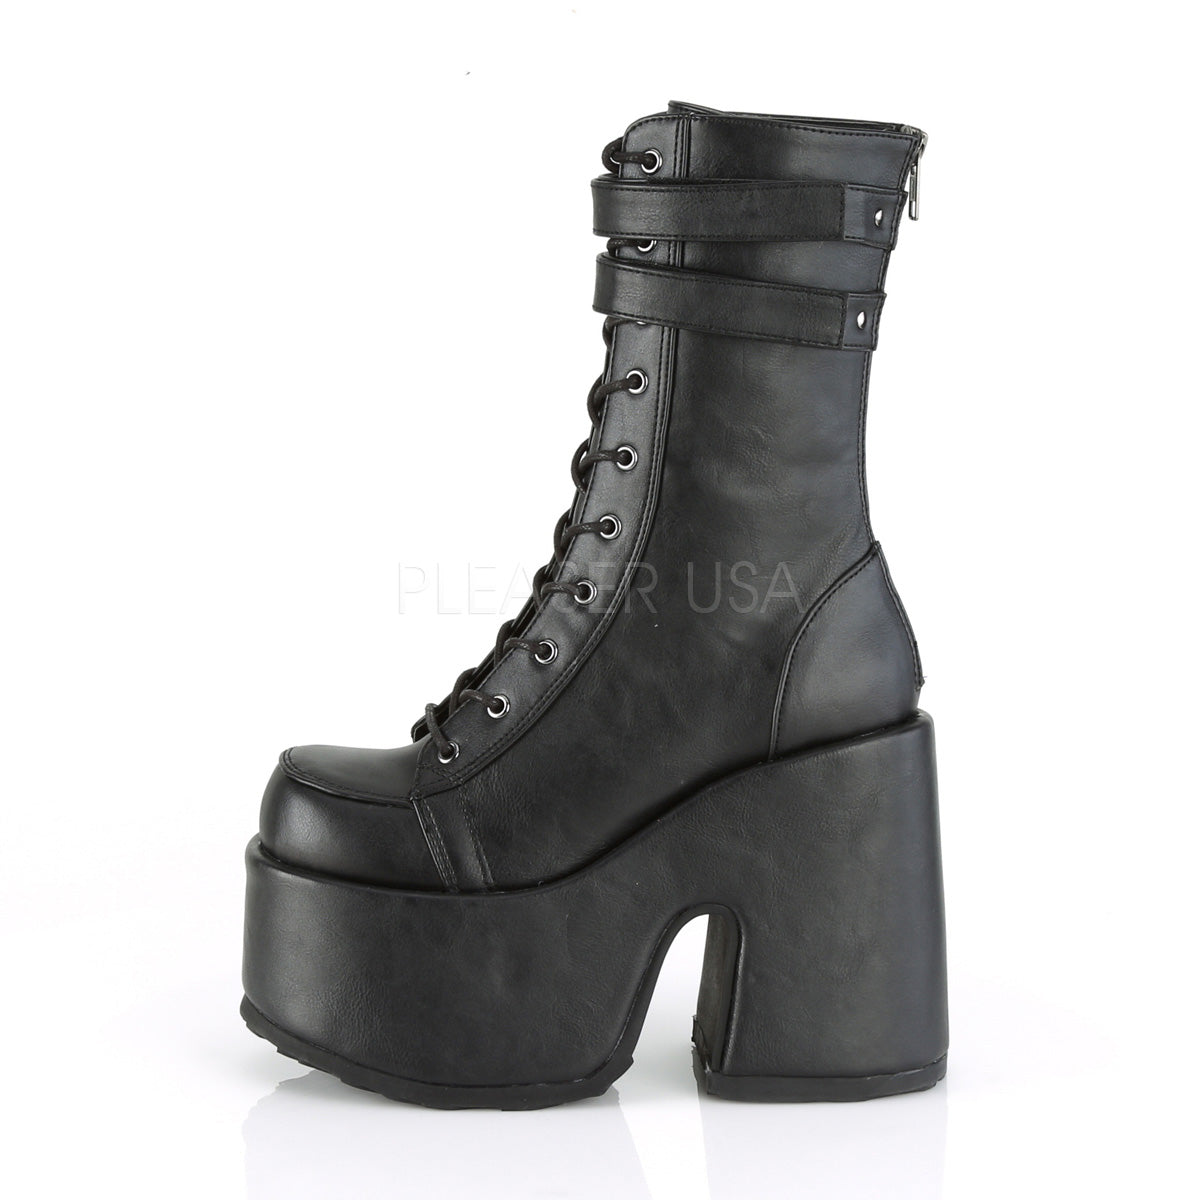 5 Inch Heel CAMEL-250 Black Vegan Leather